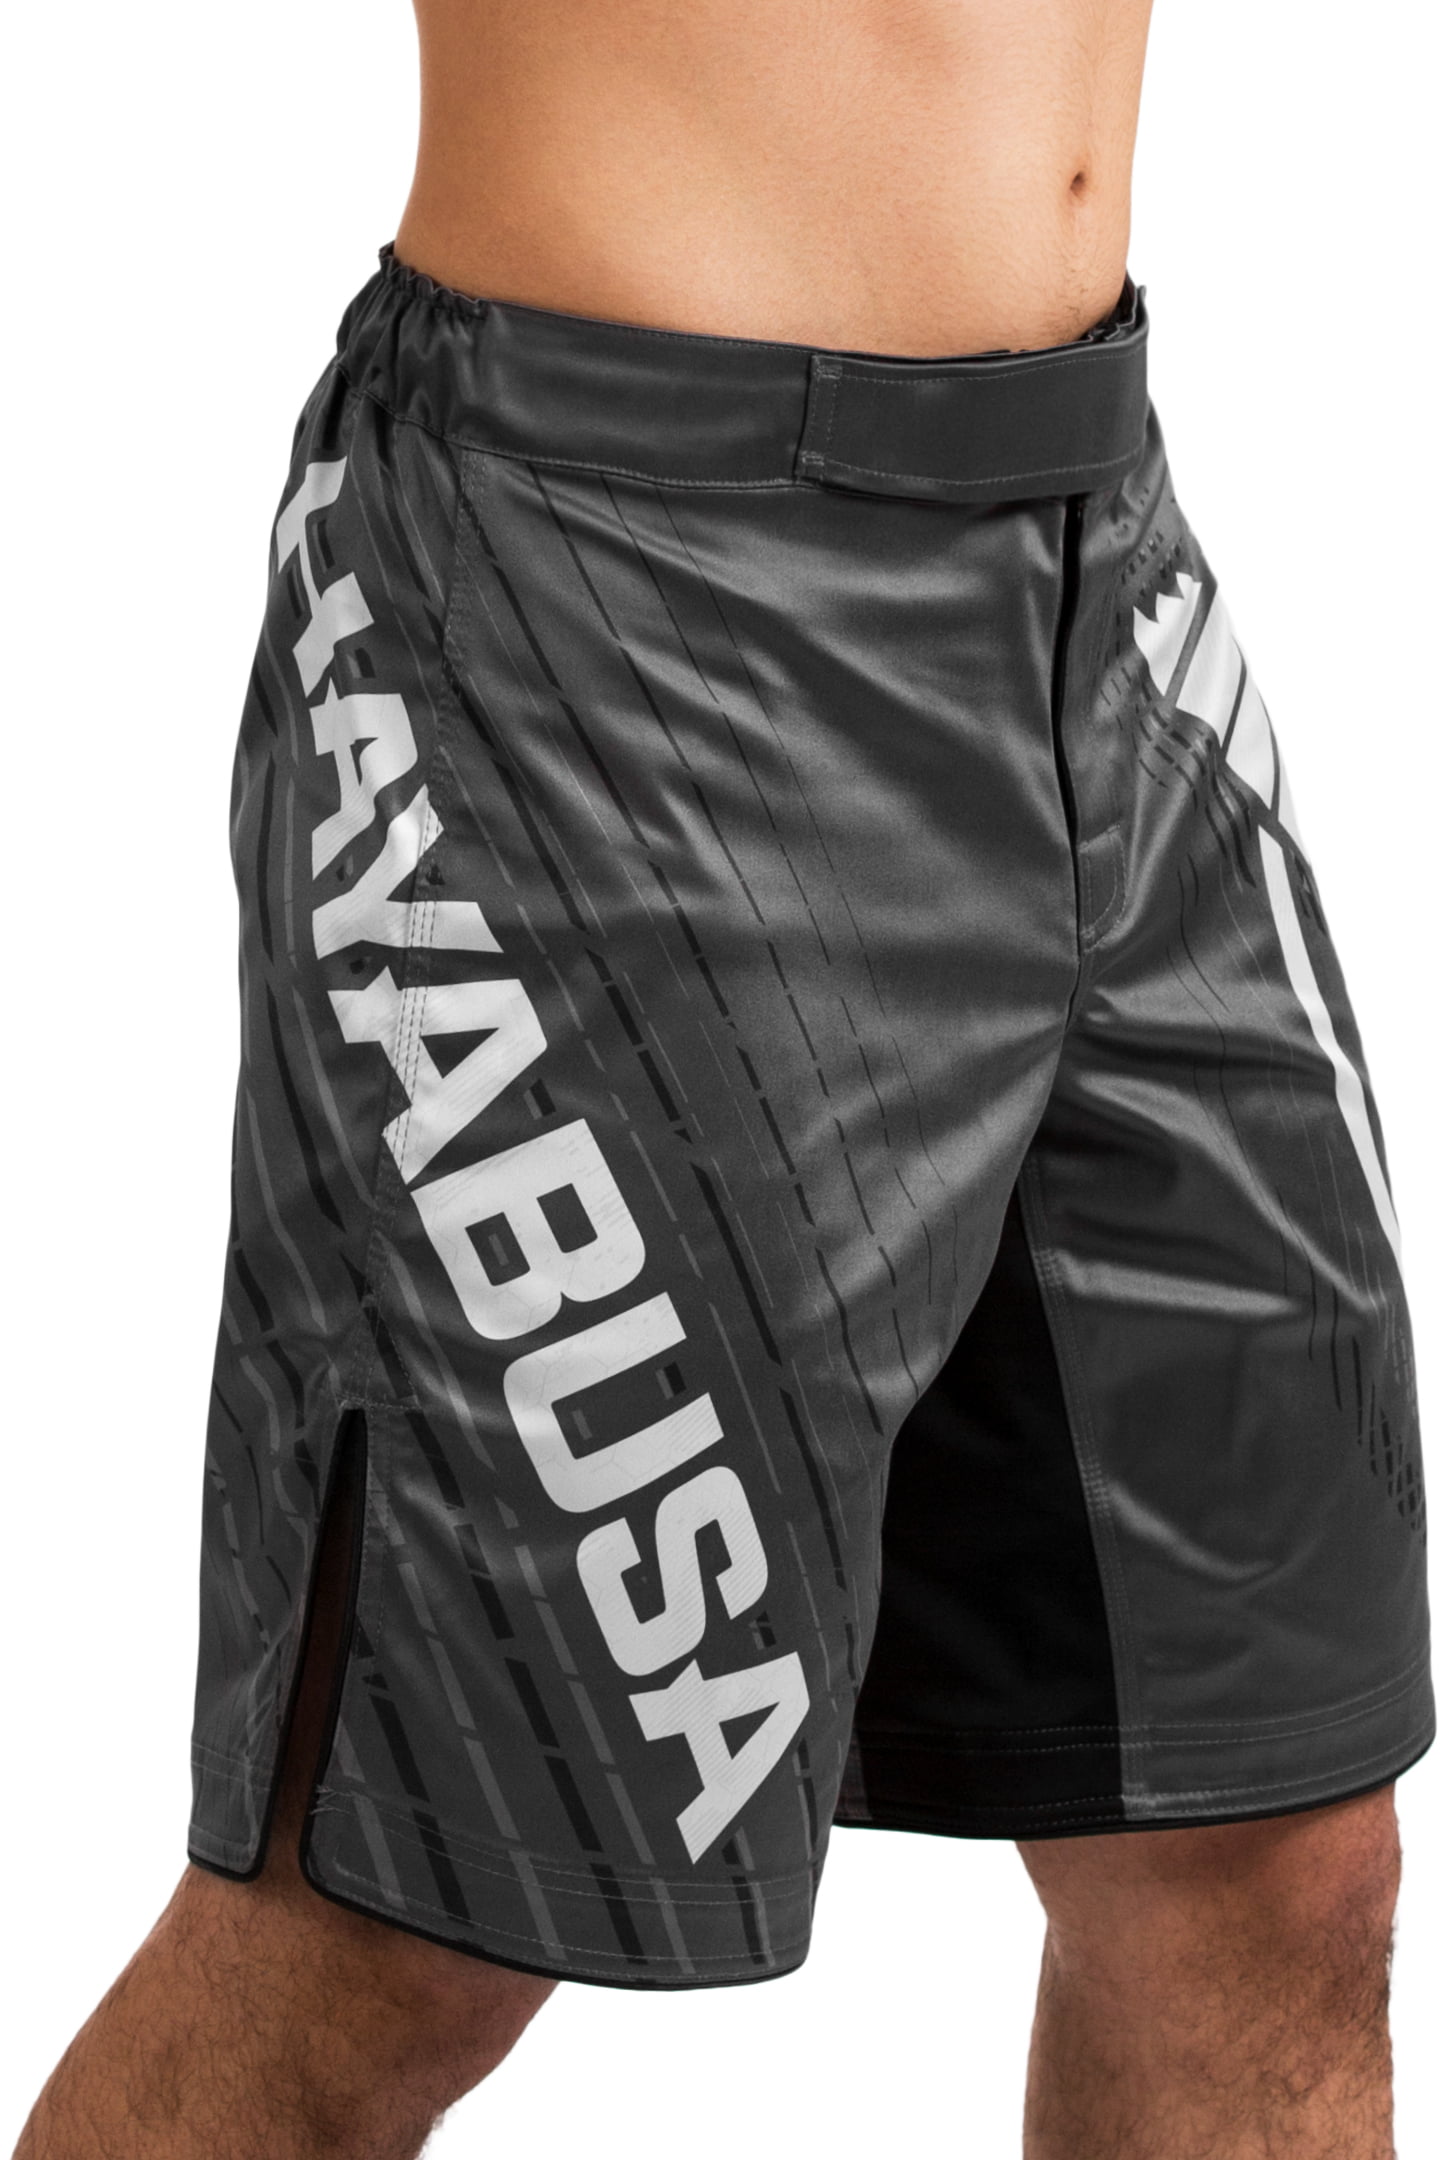 30 White Small - Free Shipping Hayabusa Elevate MMA Shorts 